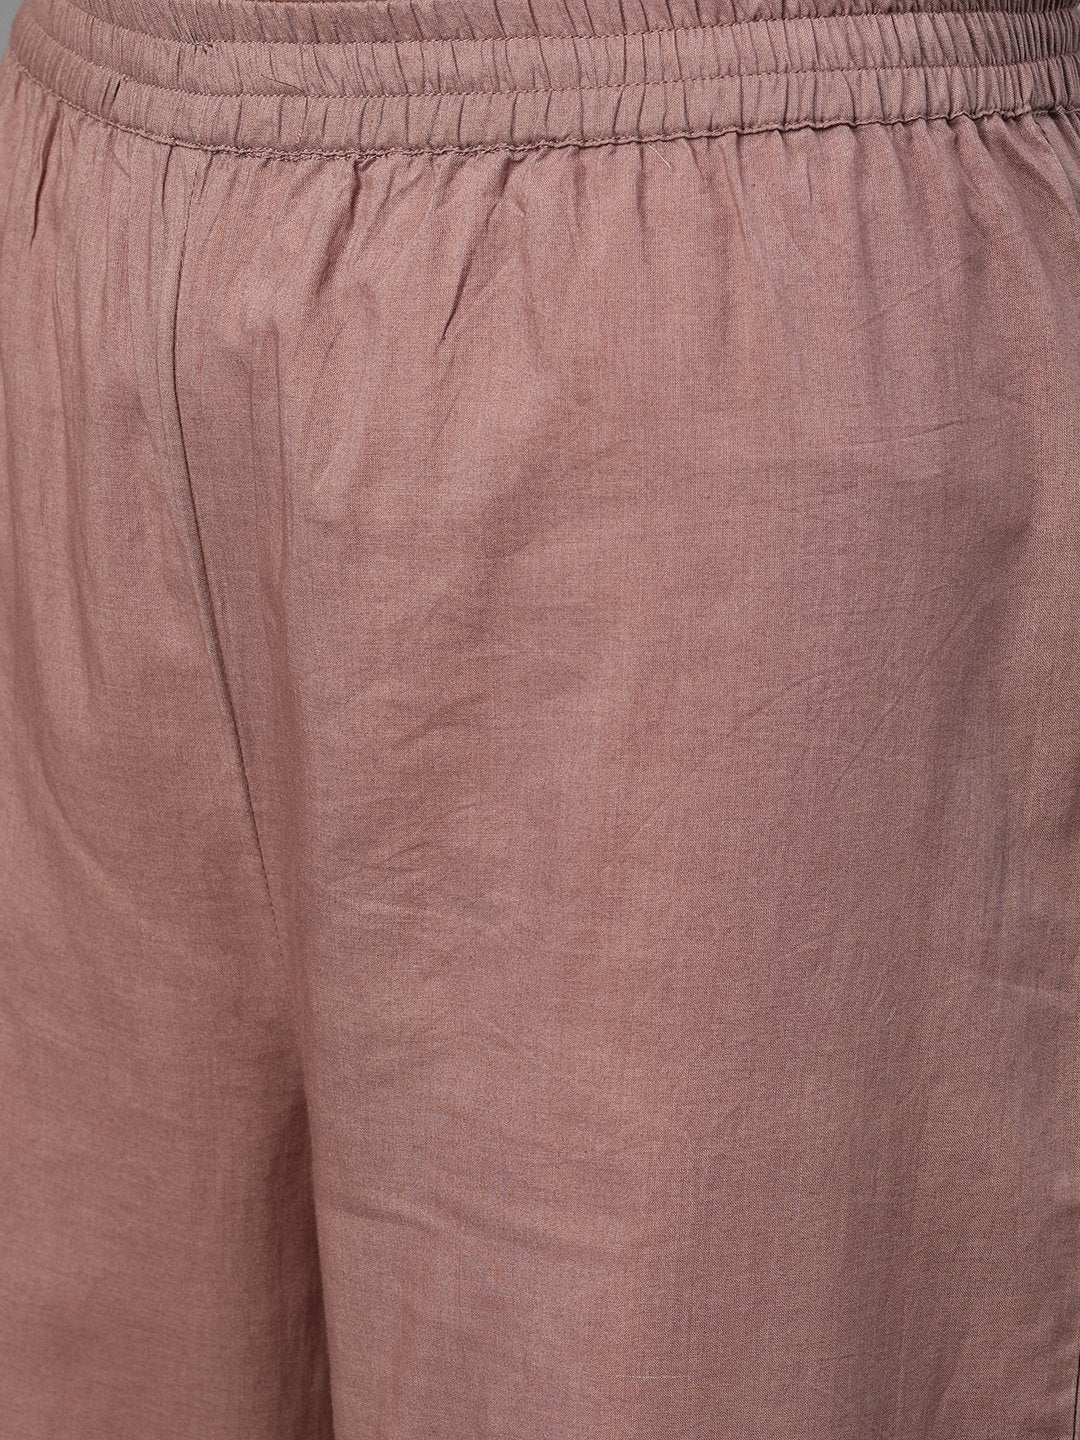 Women's Brown Three-Quarter Sleeves Printed Kurta-Palazzo With Pockets And Face Mask - Nayo Clothing